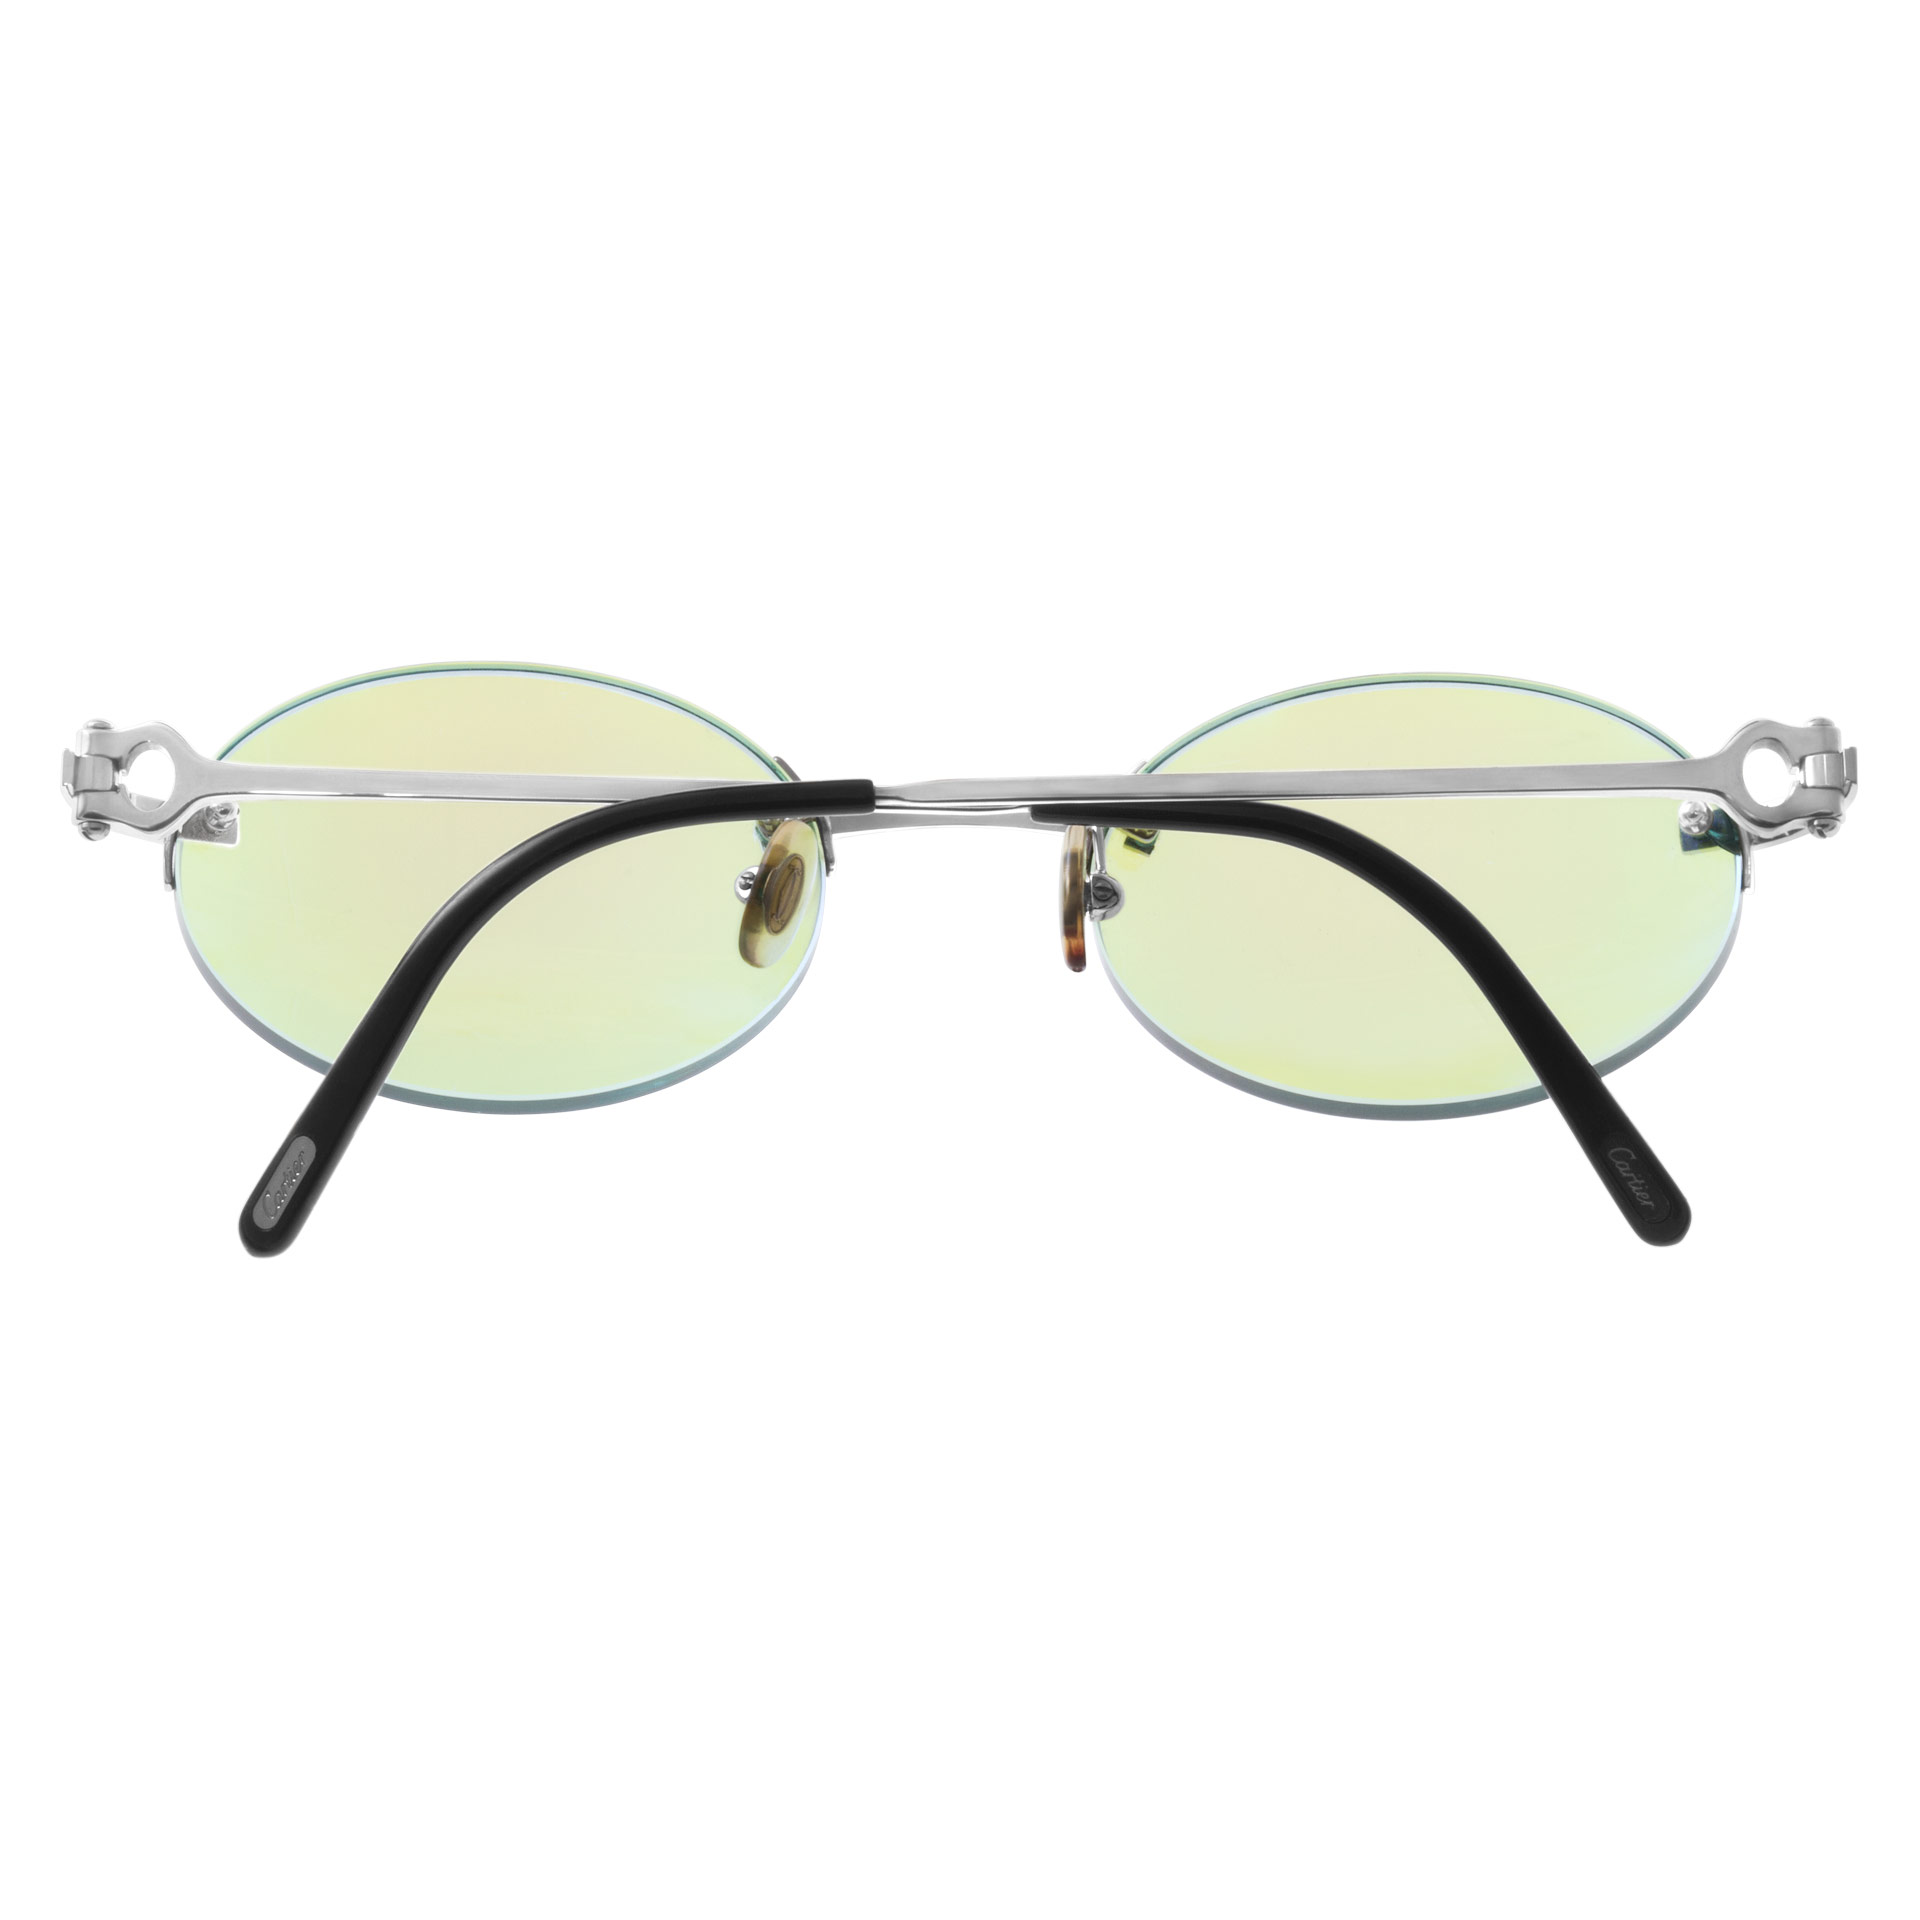 Cartier sunglasses steel frames image 2